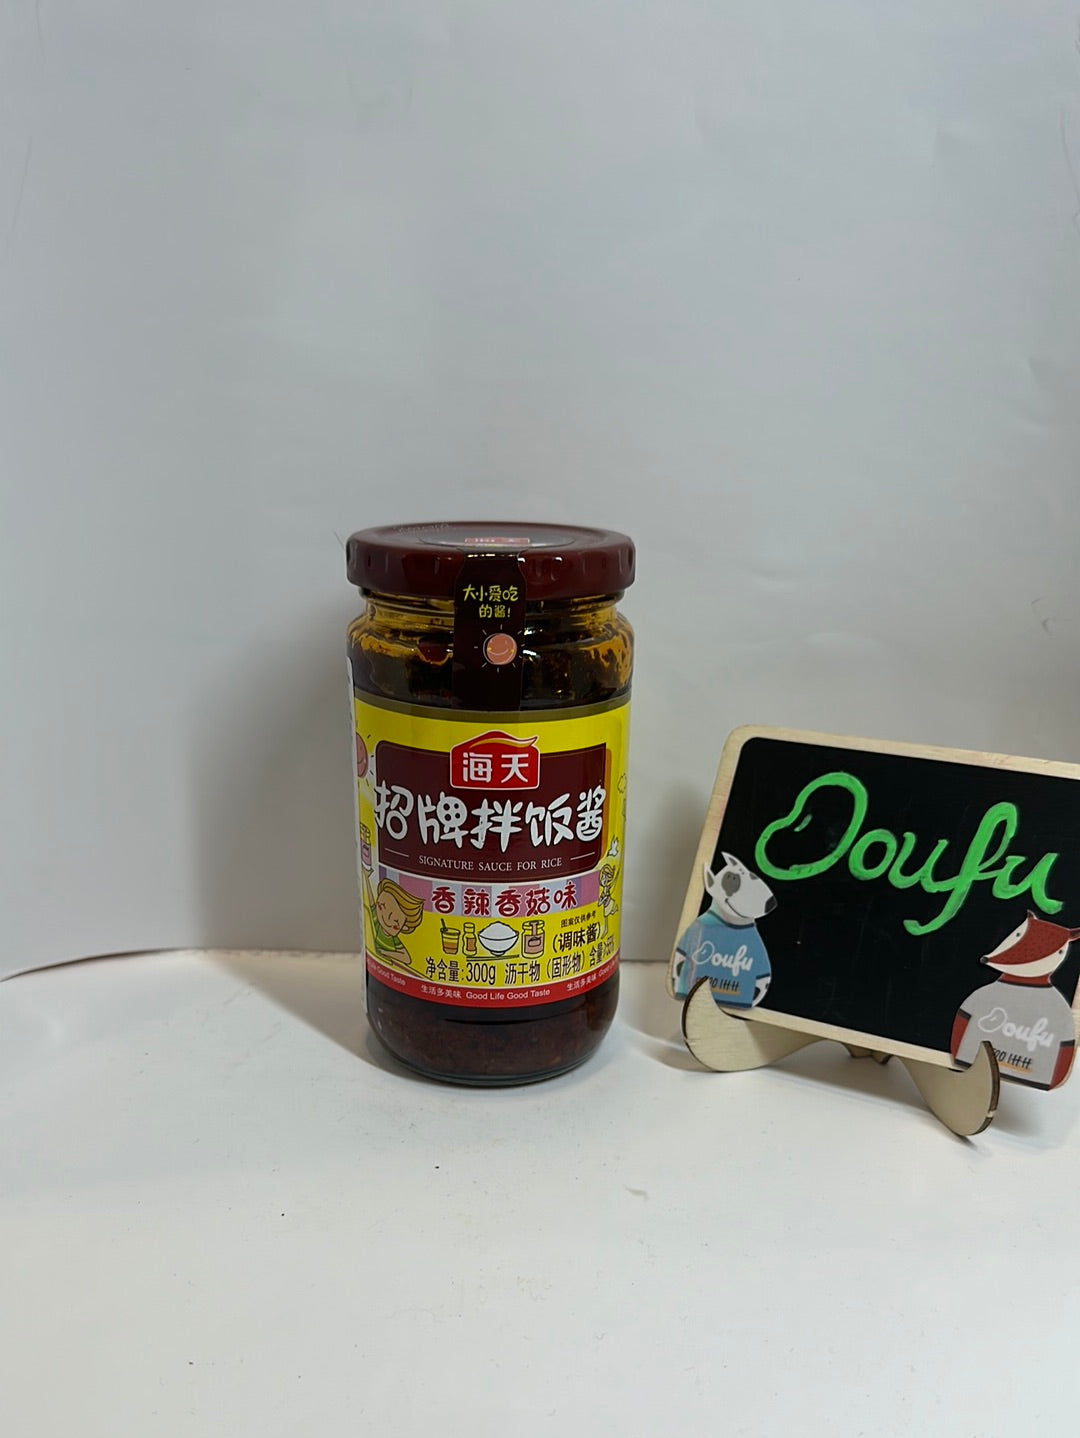 HD seasoning sauce for rice dishes 海天 招牌拌饭酱 香辣香菇味 300g